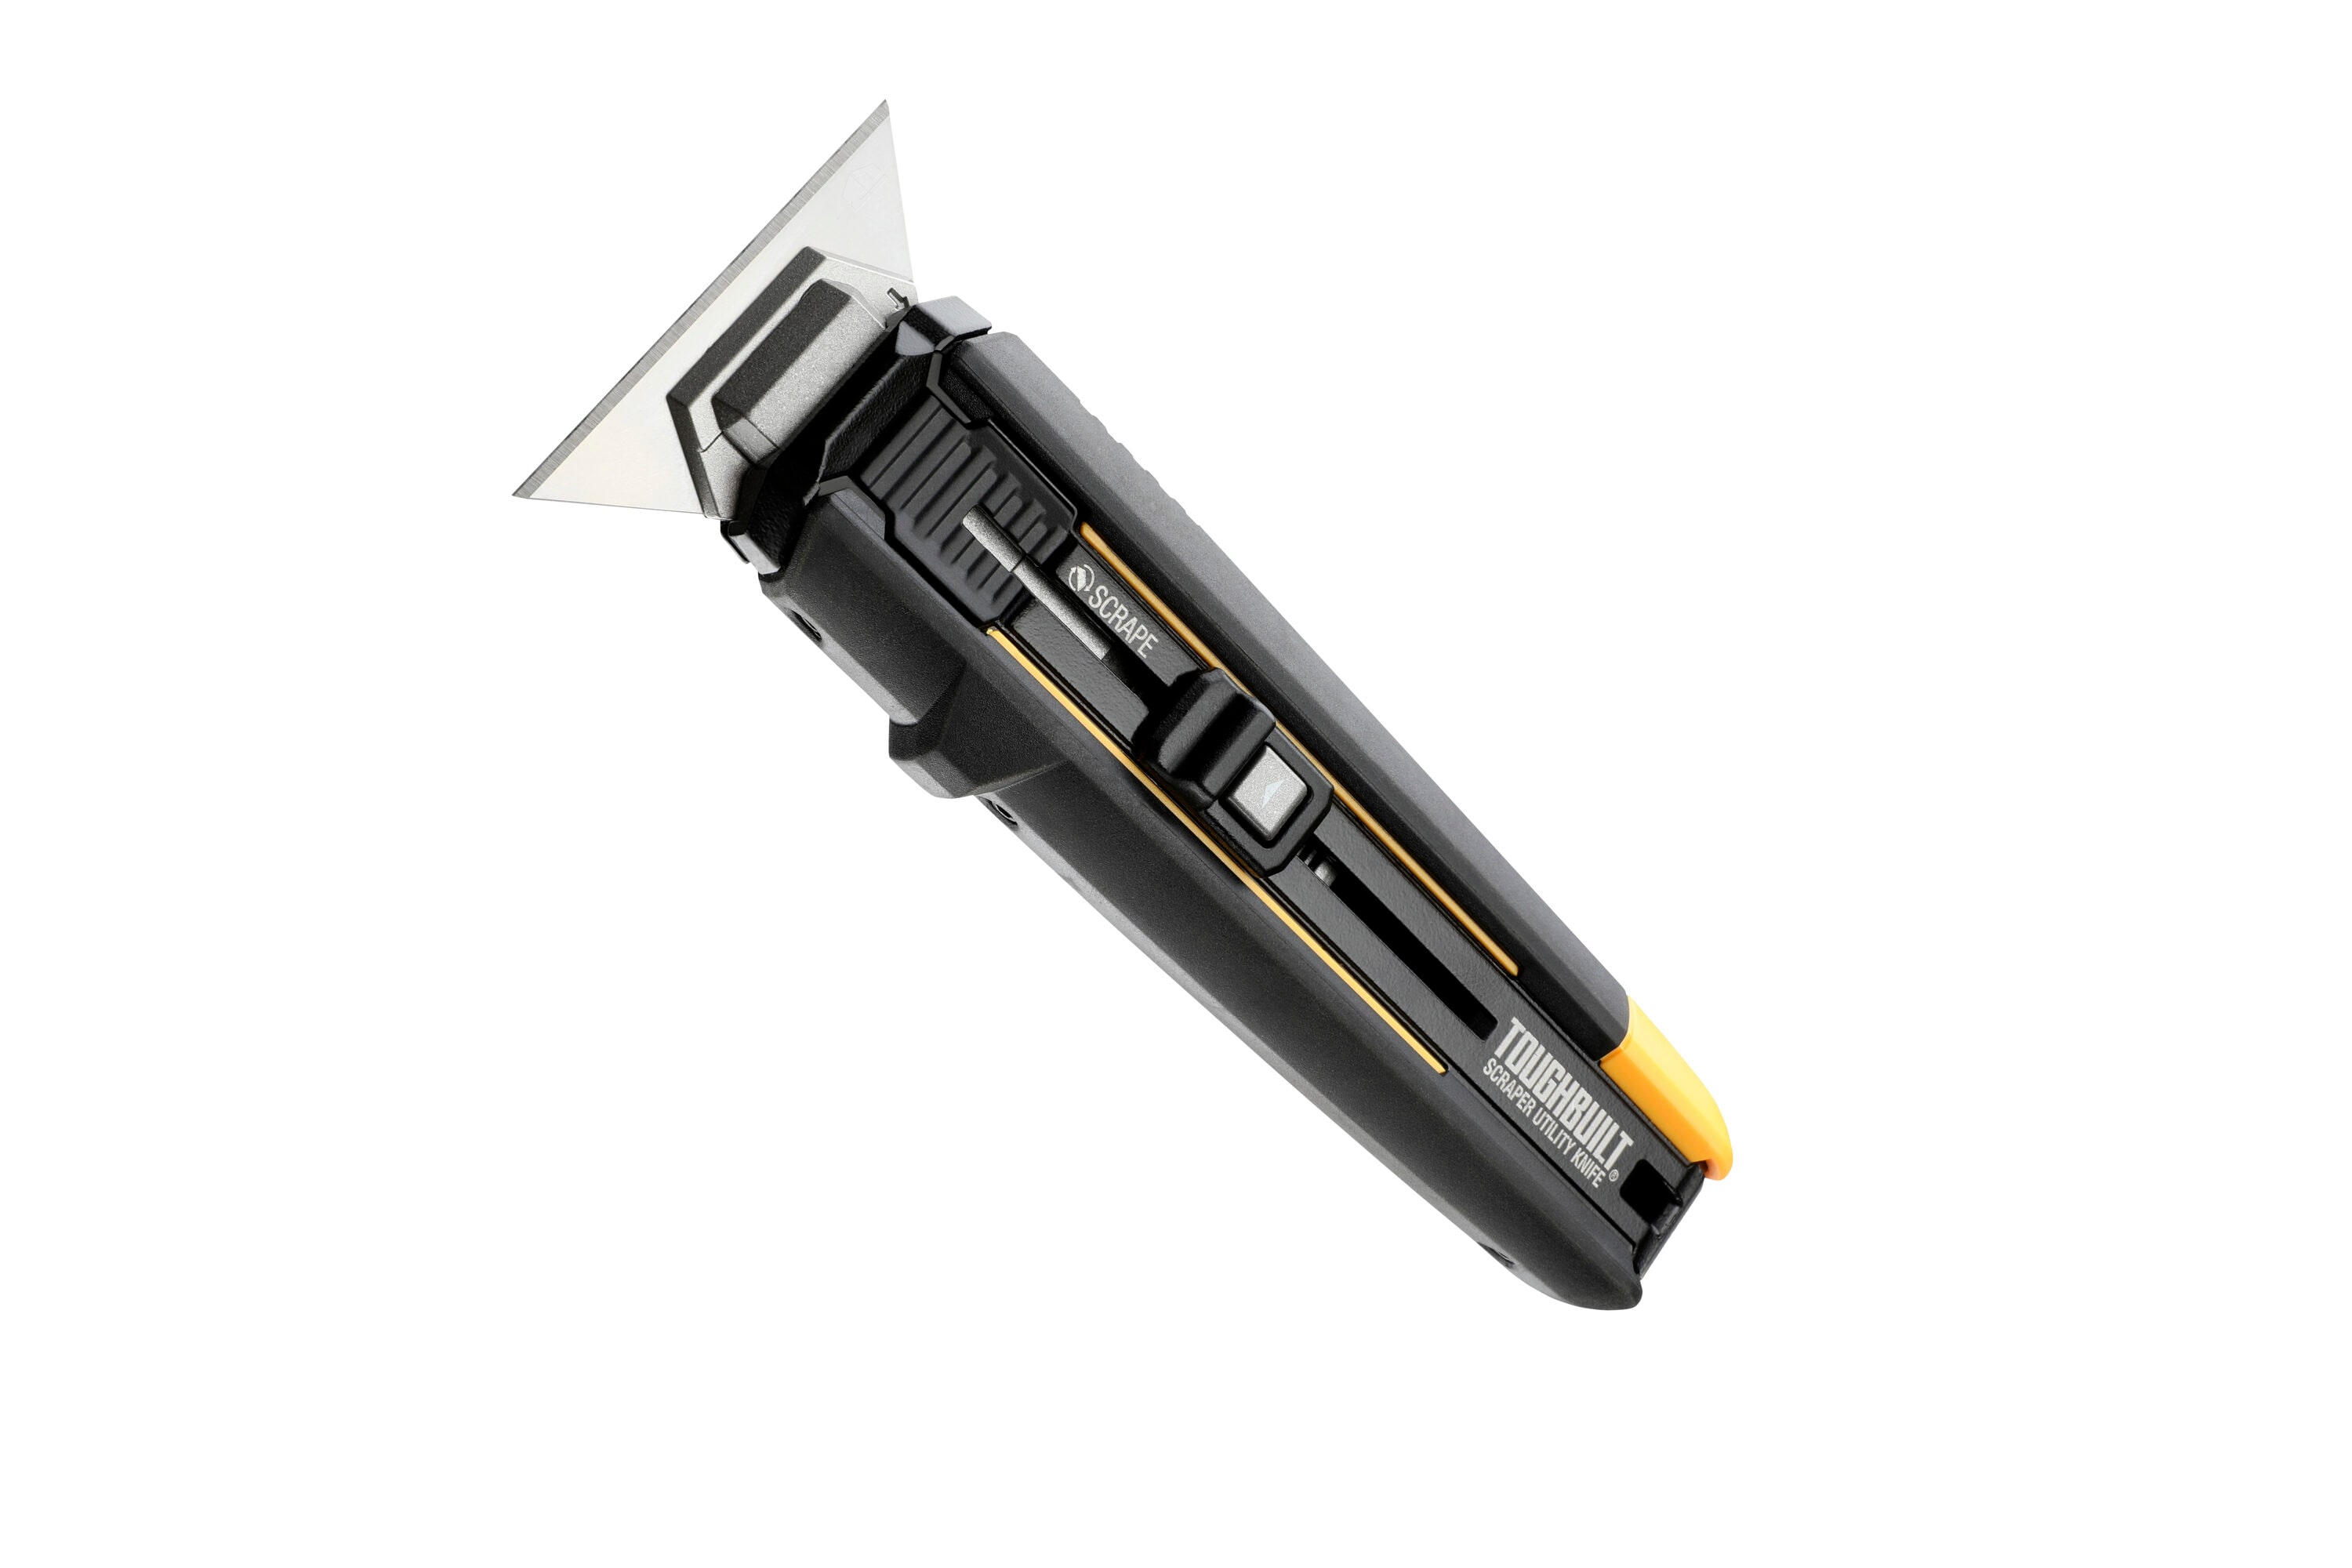 ToughBuilt TB H4S5 01 Scraper Utility Knife 